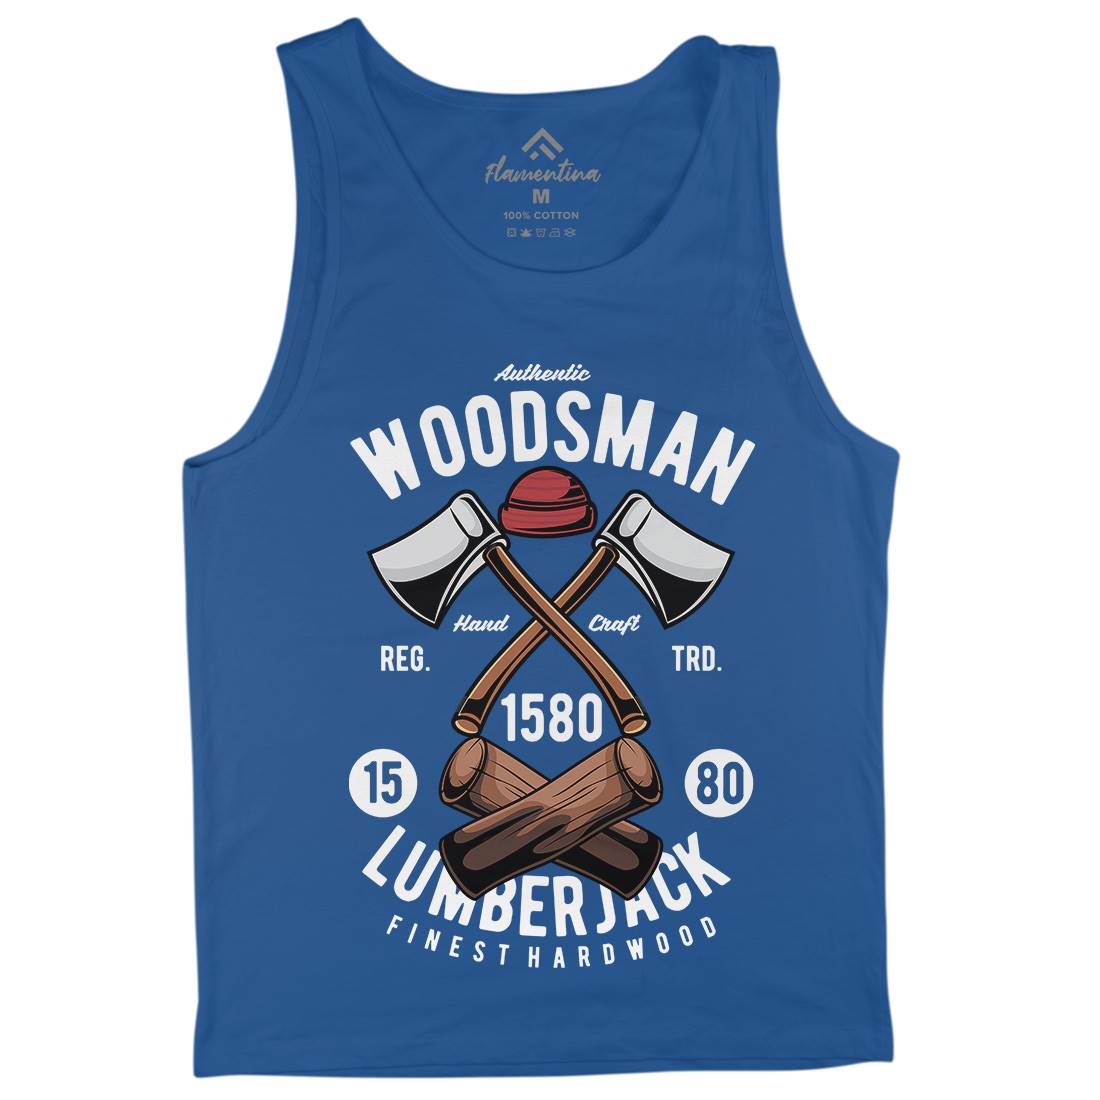 Woodsman Mens Tank Top Vest Work C474